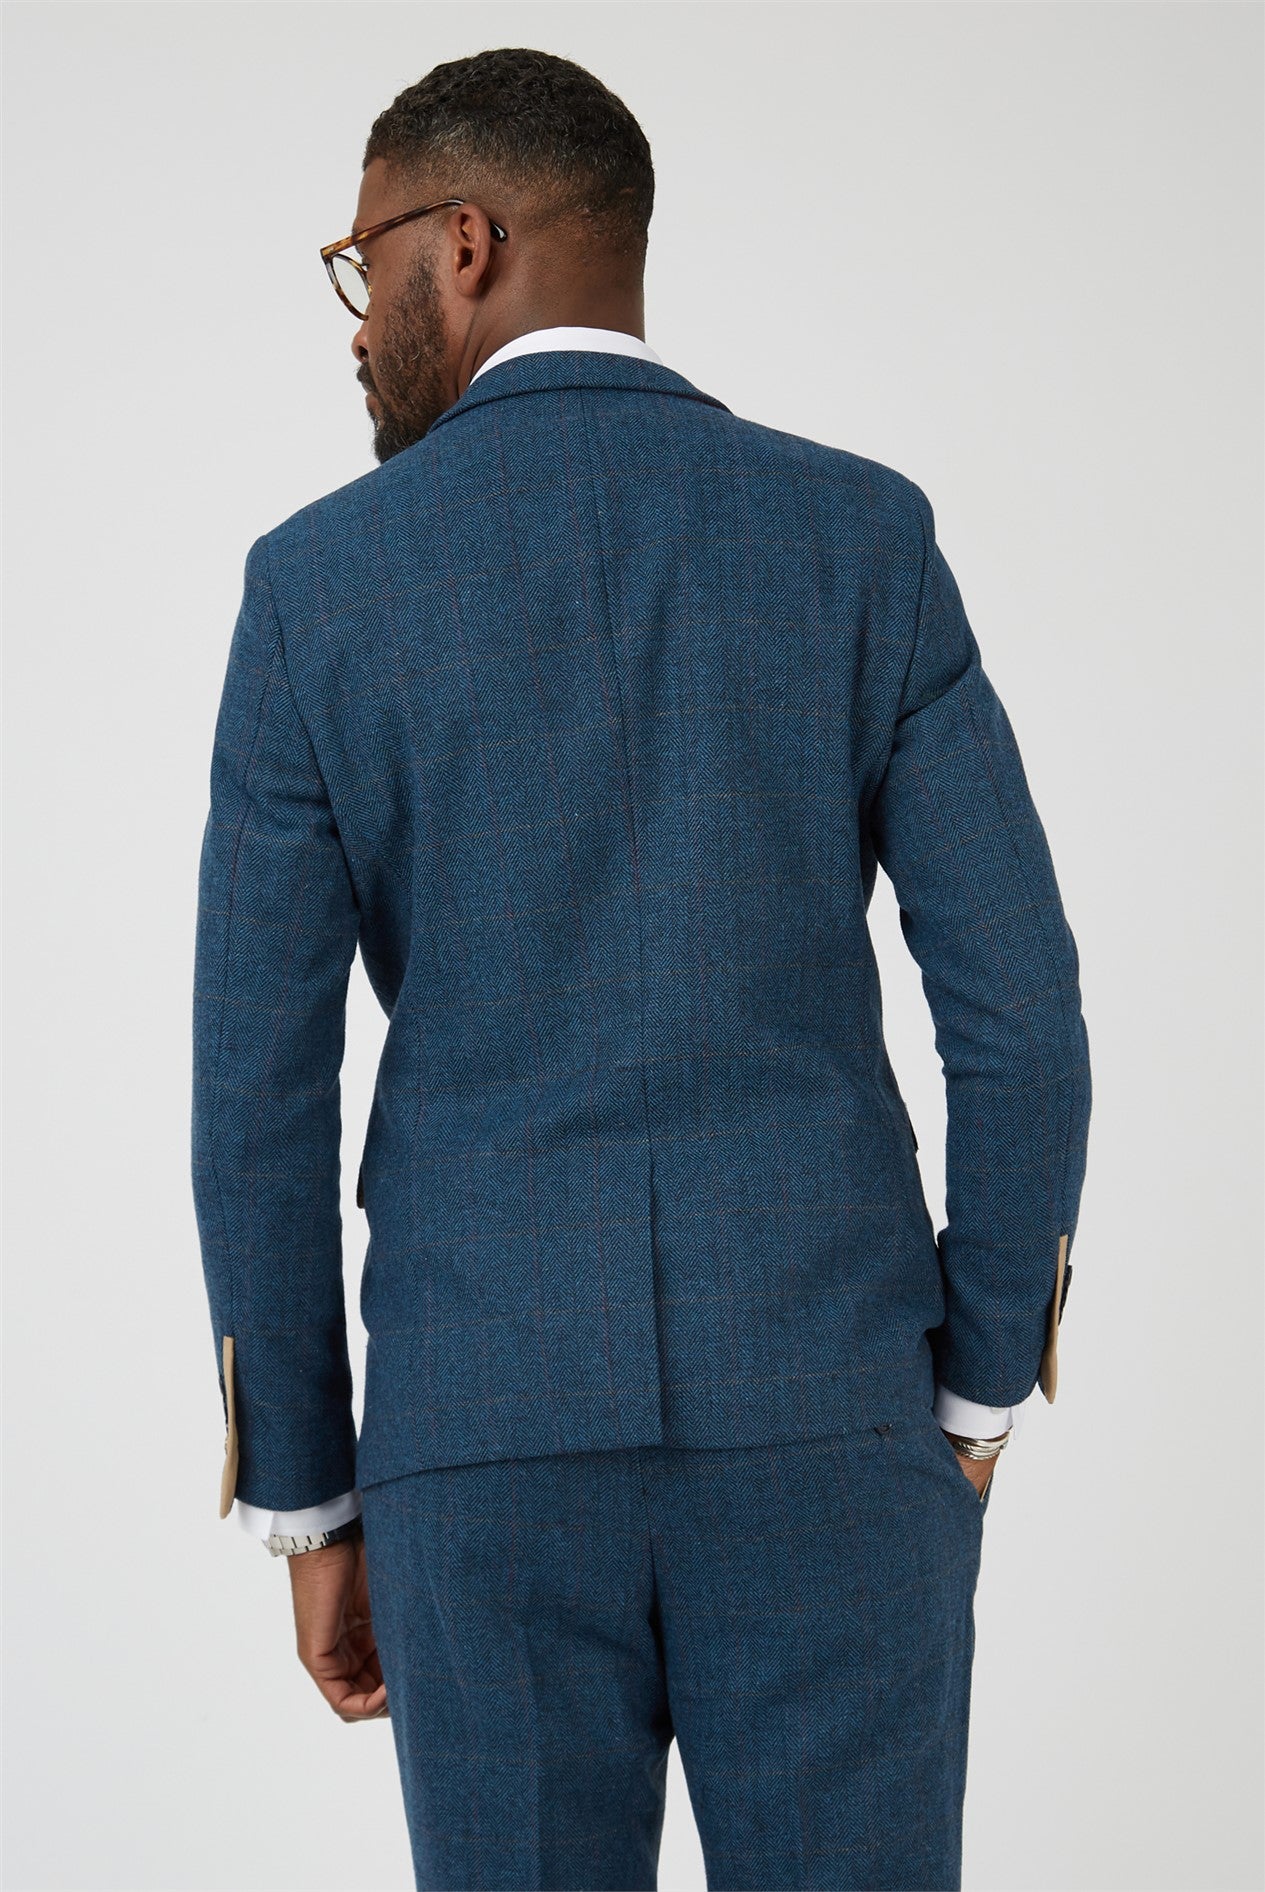 Marc Darcy Blue Check Three Piece Suit